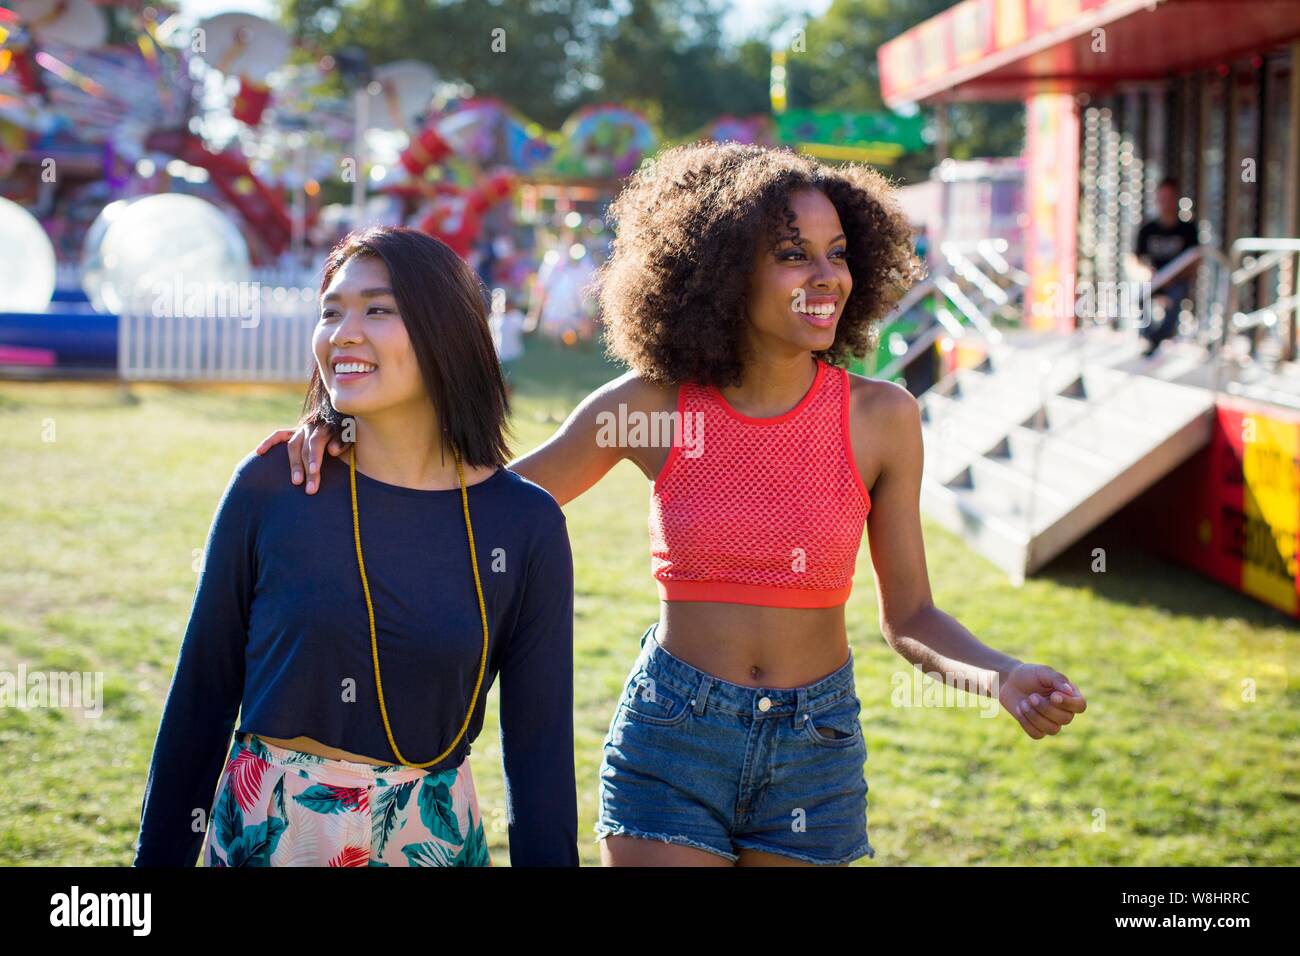 Two young women at fun fair. Stock Photo